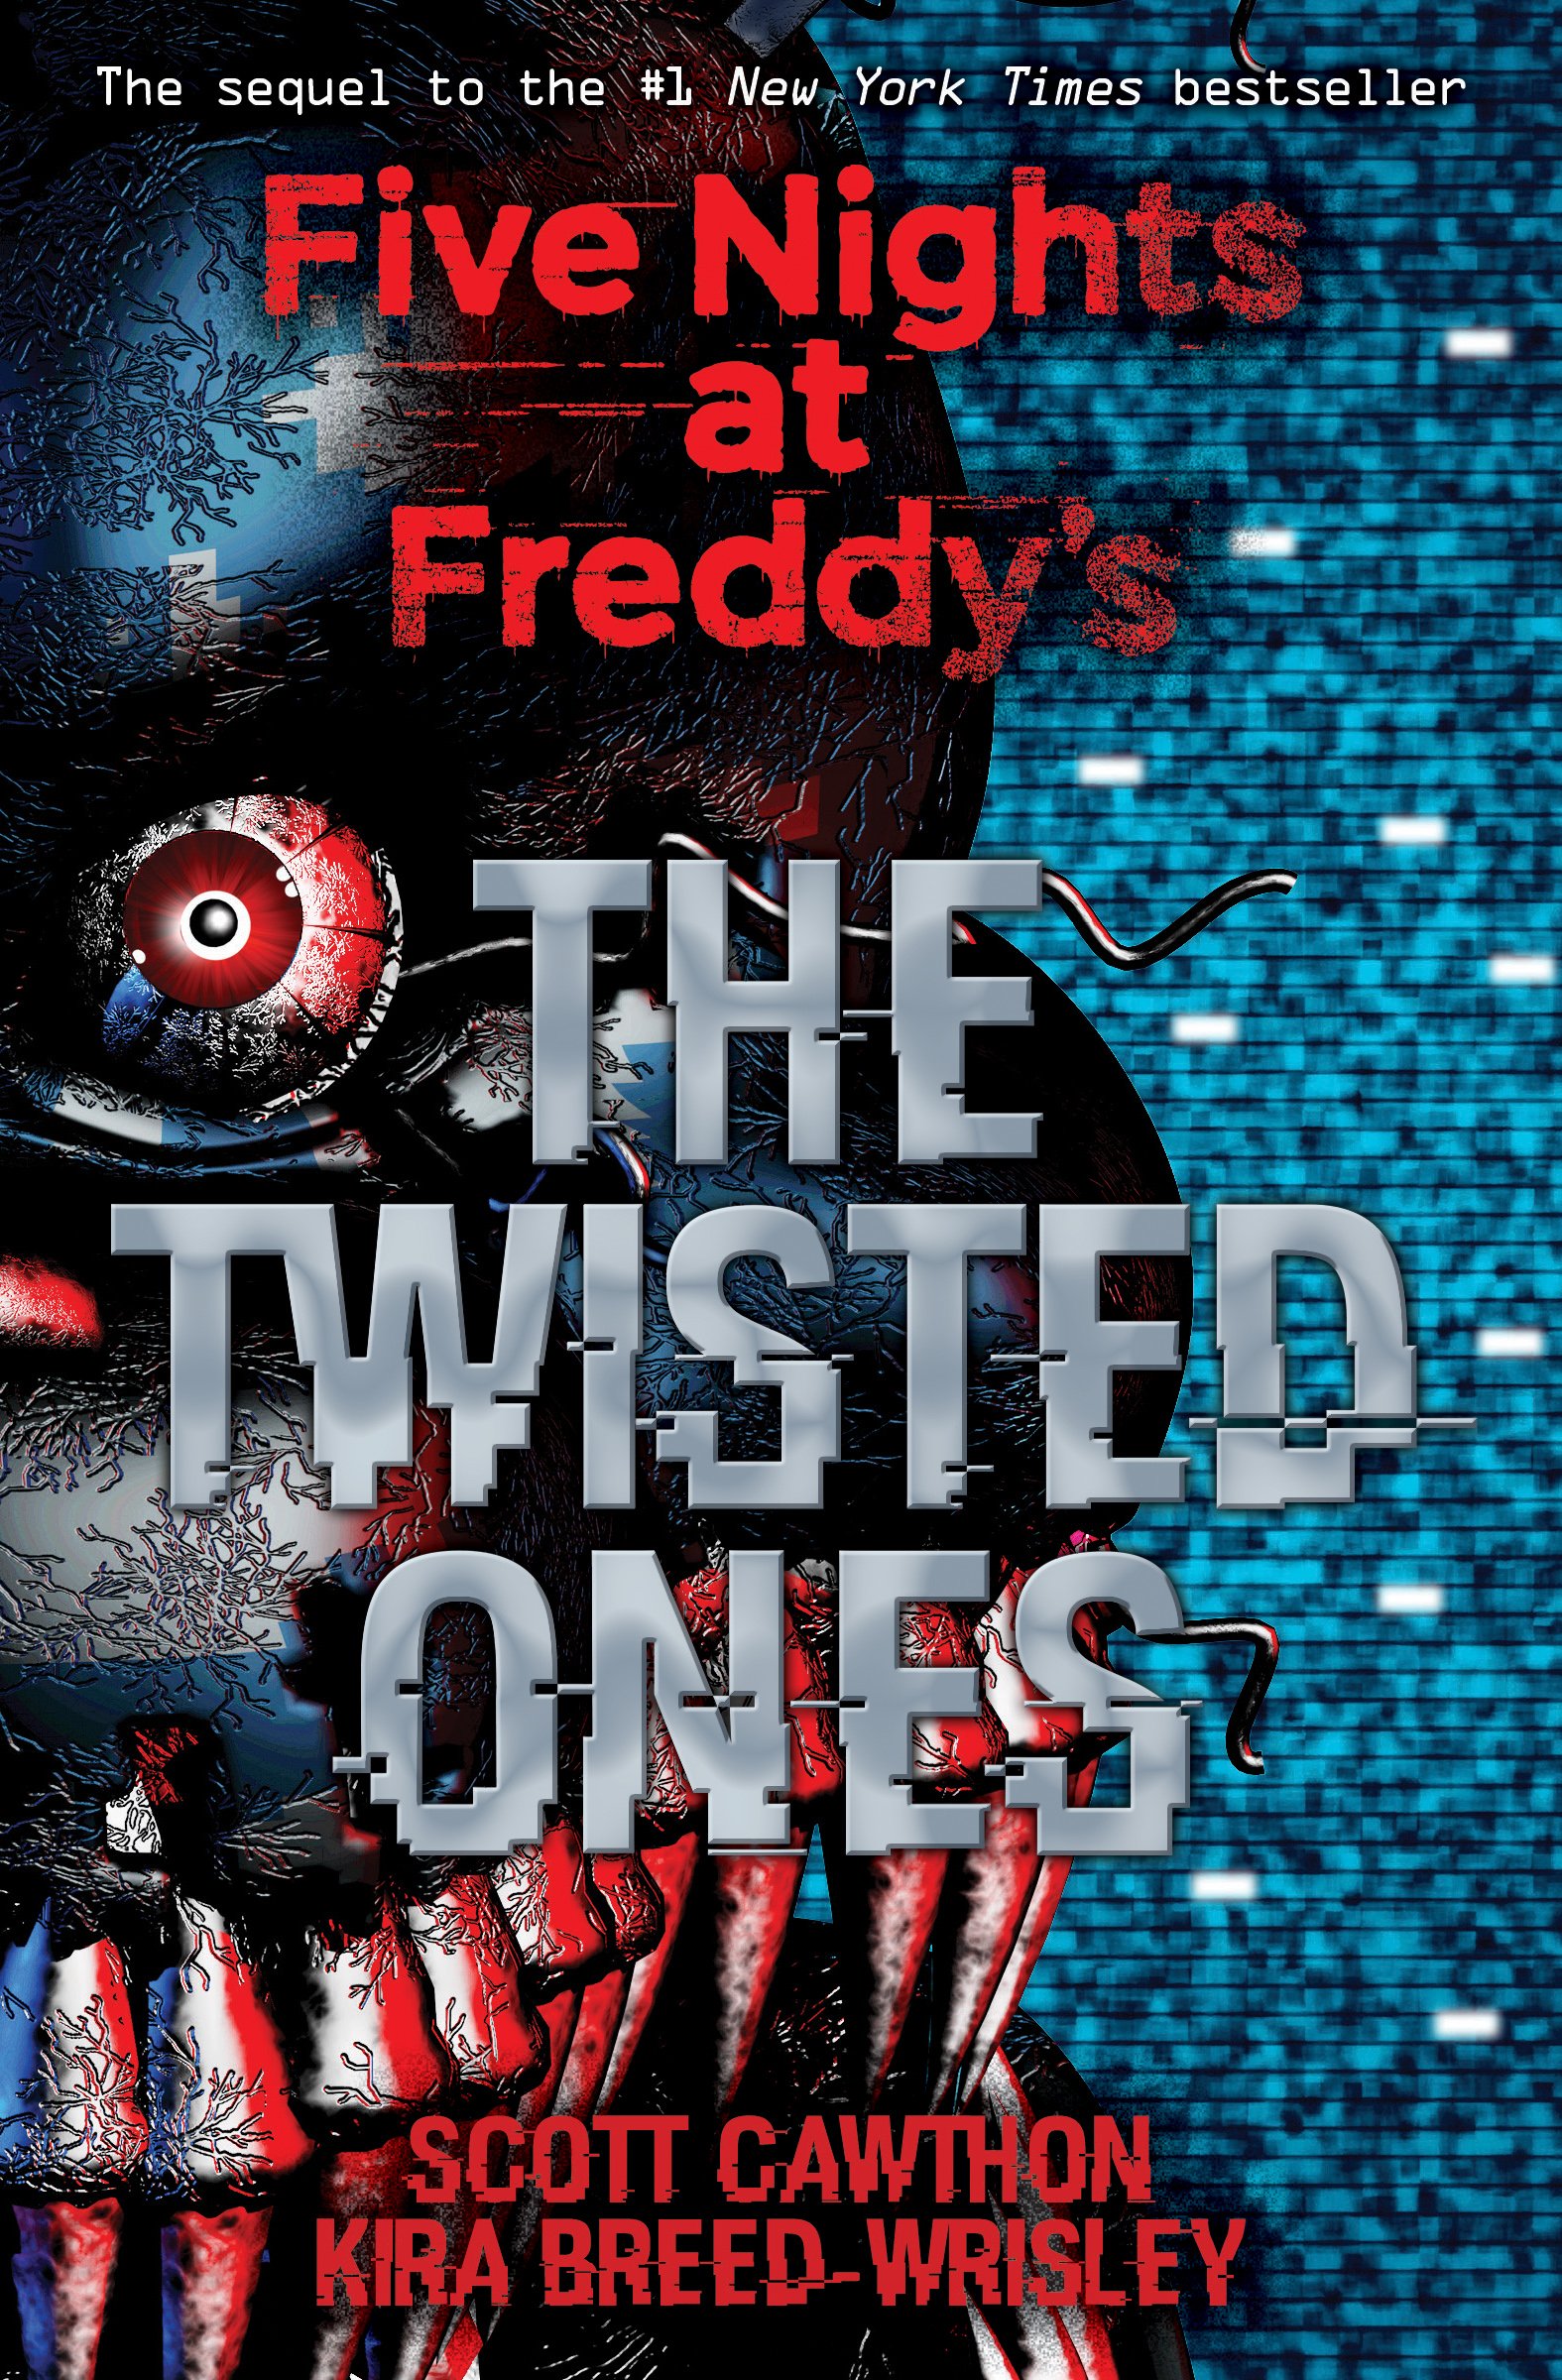 The Twisted Ones | Scott Cawthon, Kira Breed-Wrisley